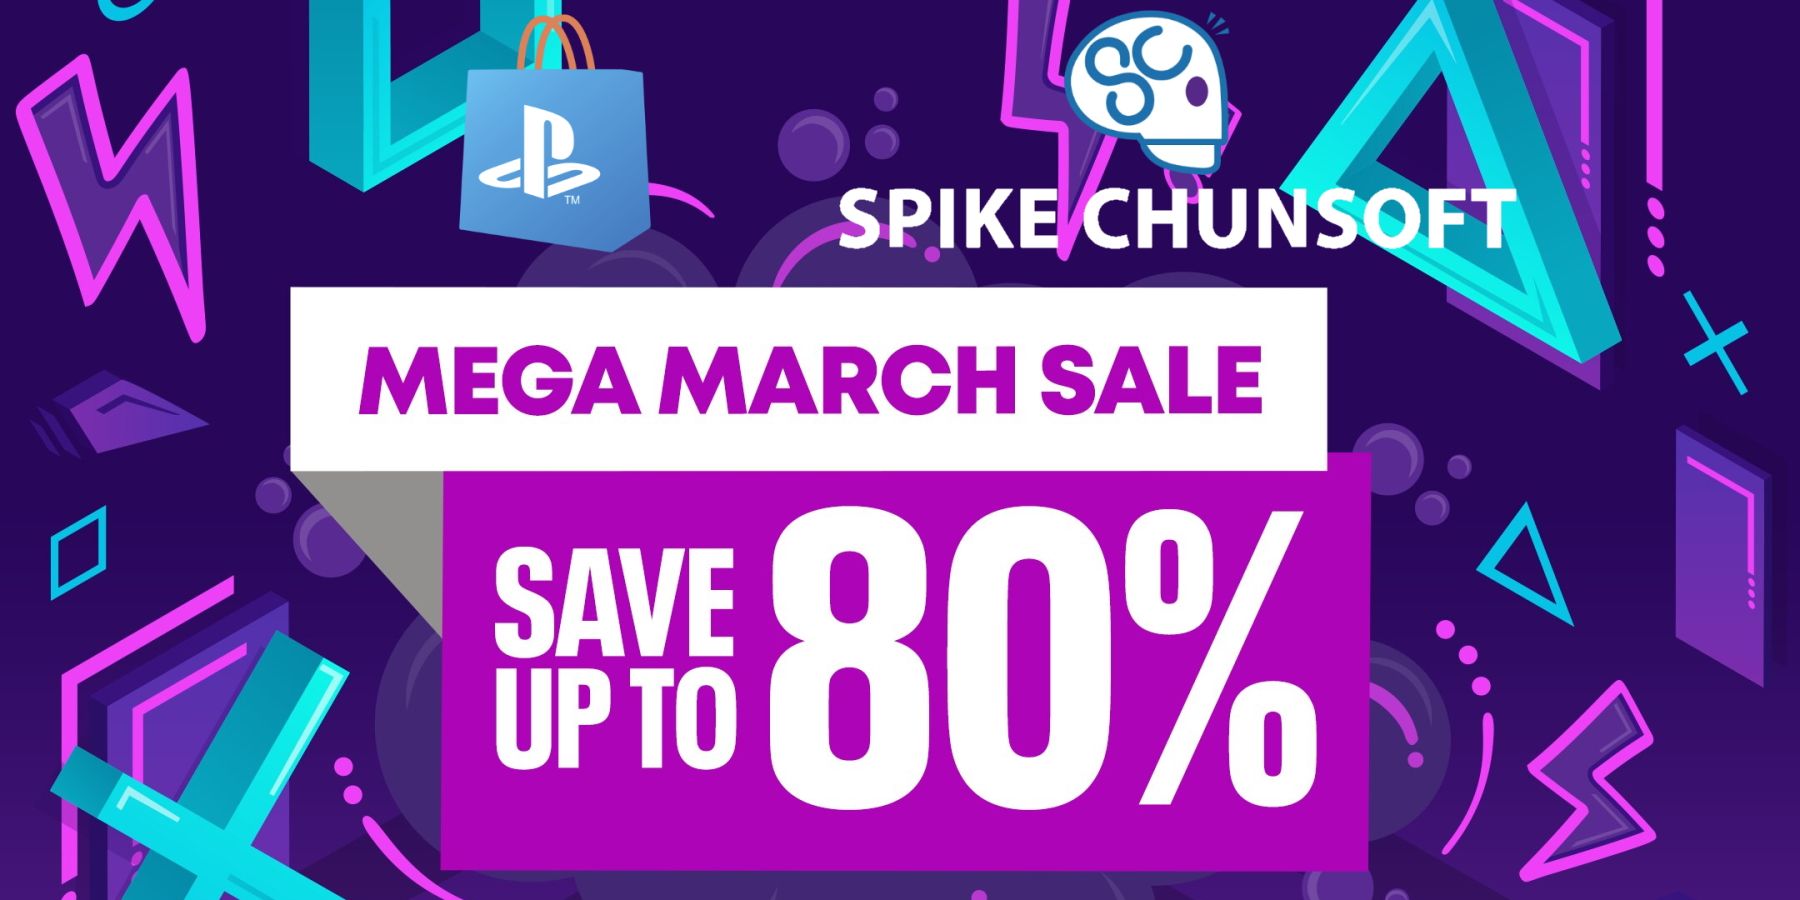 playstation-store-mega-march-sale-spike-chunsoft